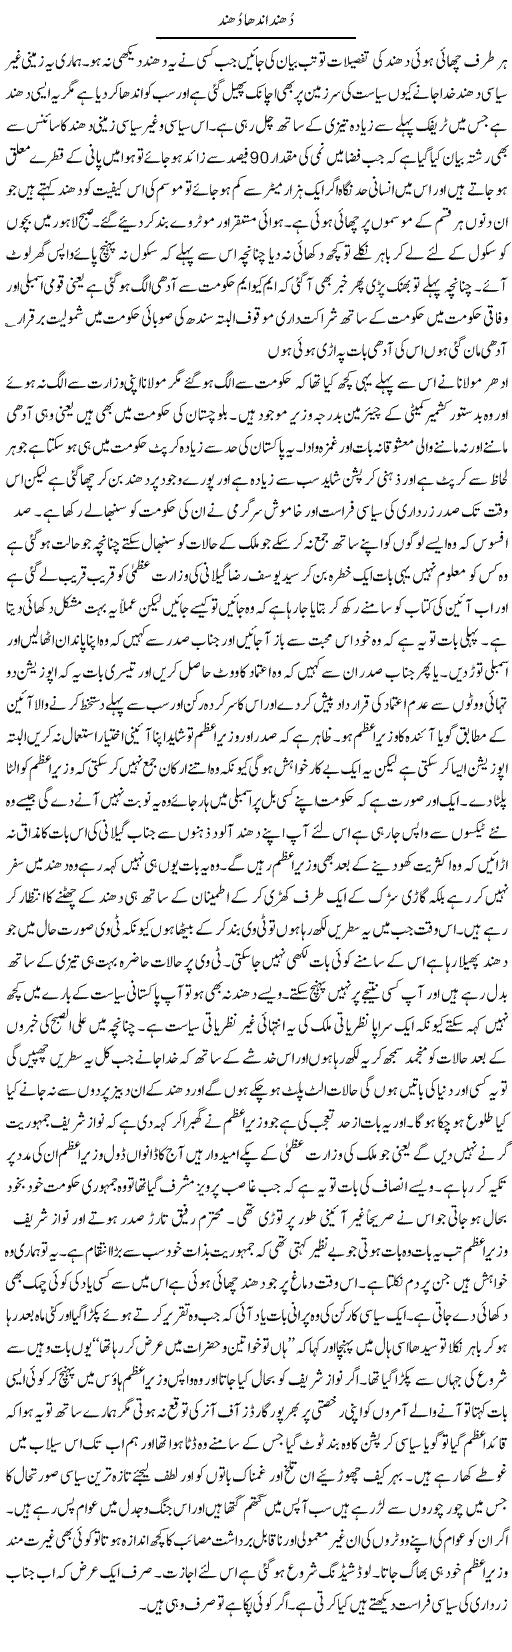 Maulana Politics Express Column Abdul Qadir 4 January 2011